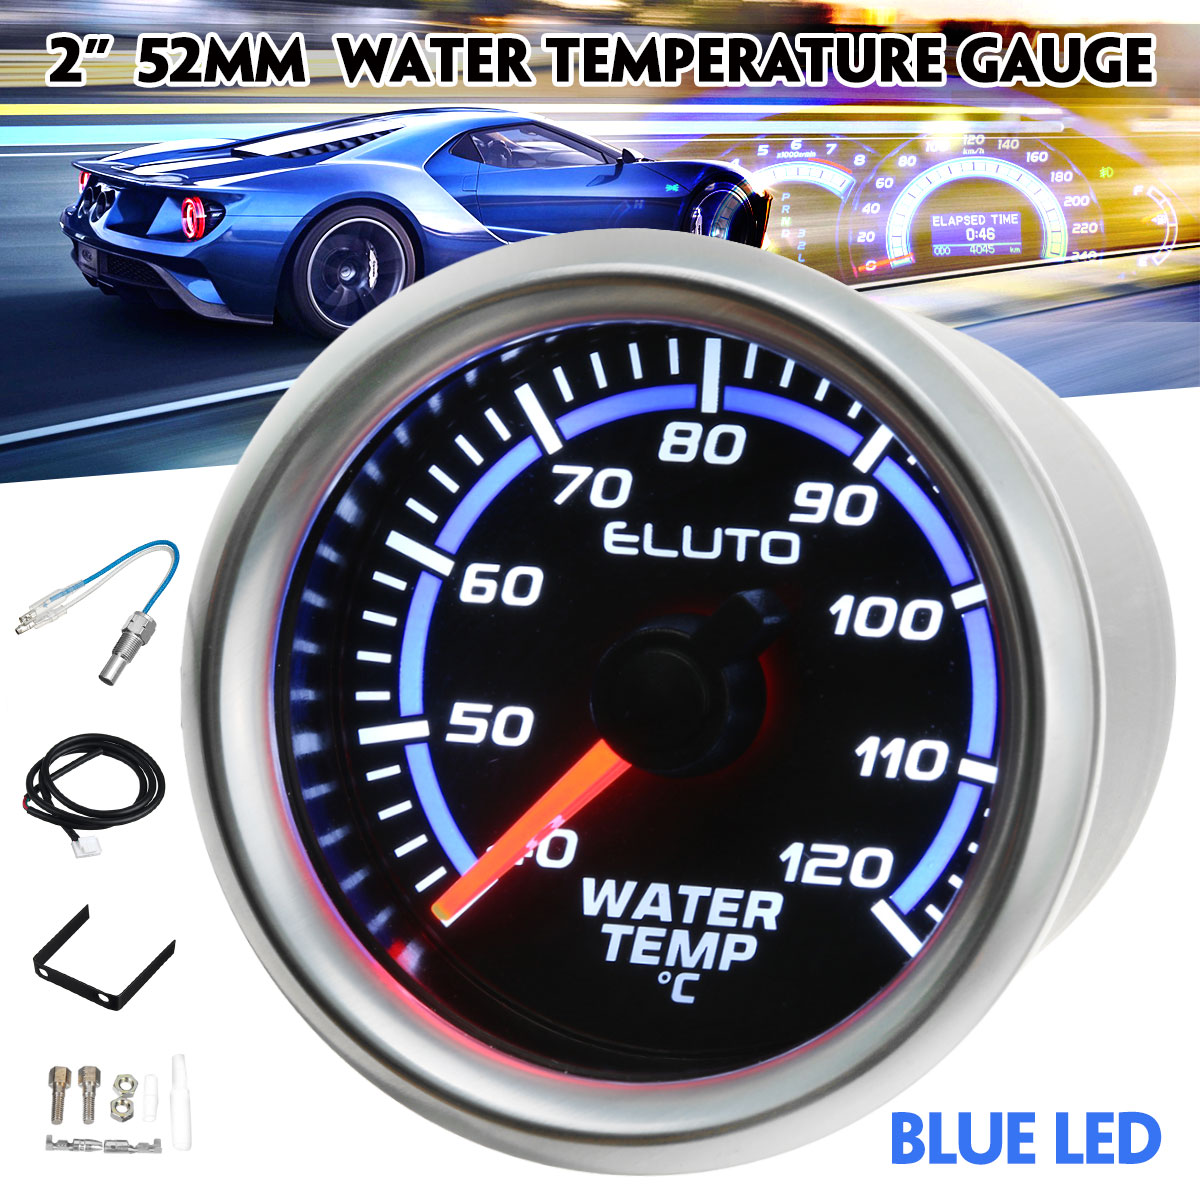 2quot-52mm-40-120degC-Water-Temperature-Gauge-Blue-LED-Black-Face-Car-Meter--Sensor-1743419-1